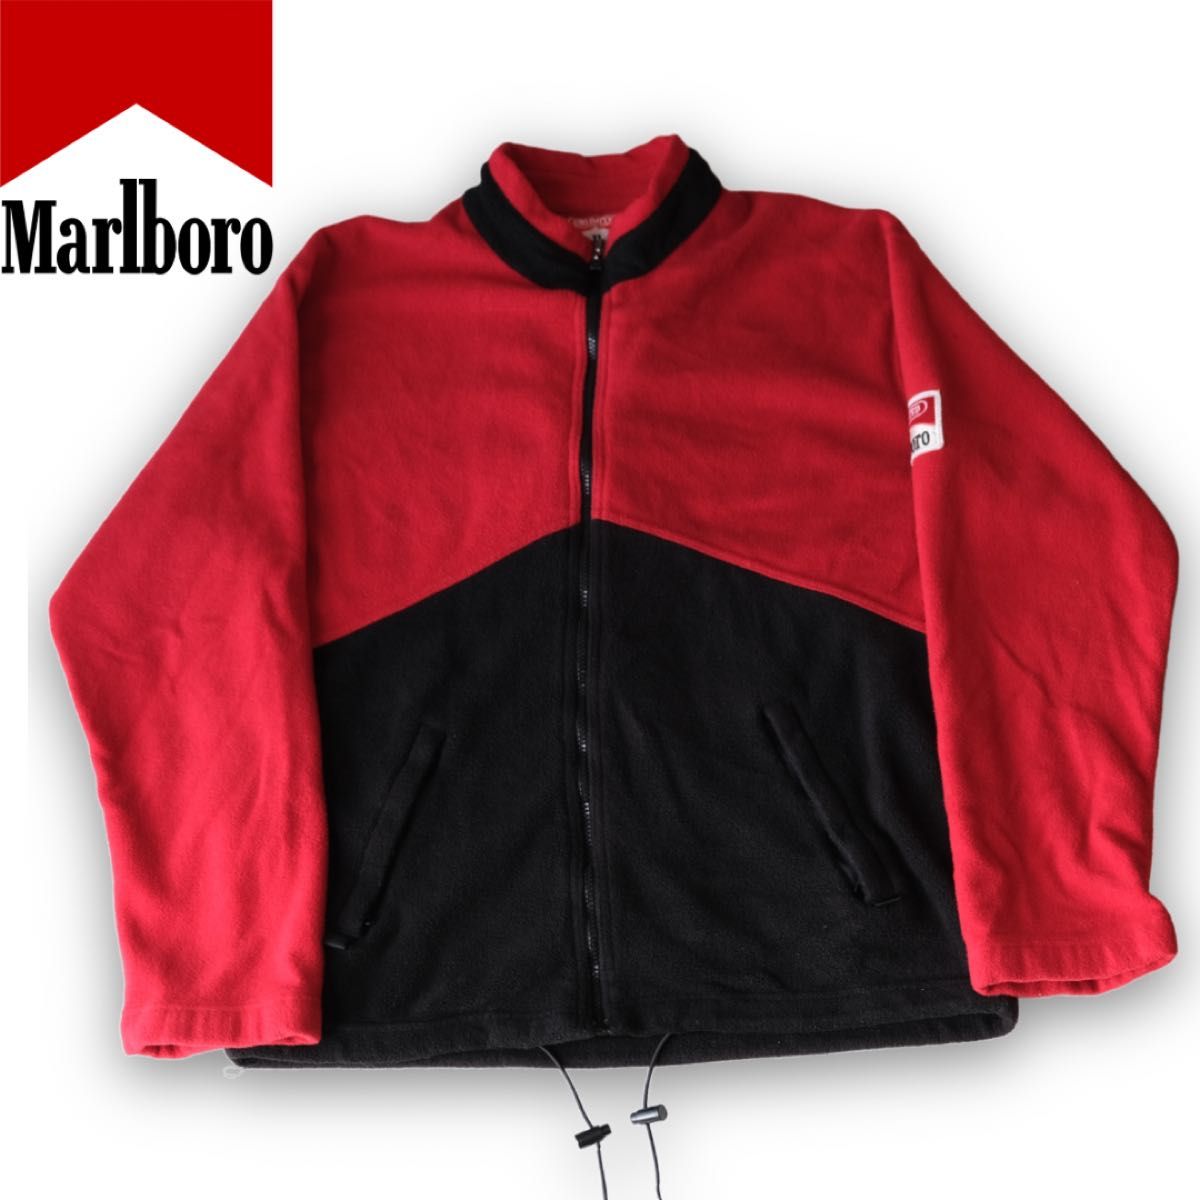 Marlboro fleece jacket